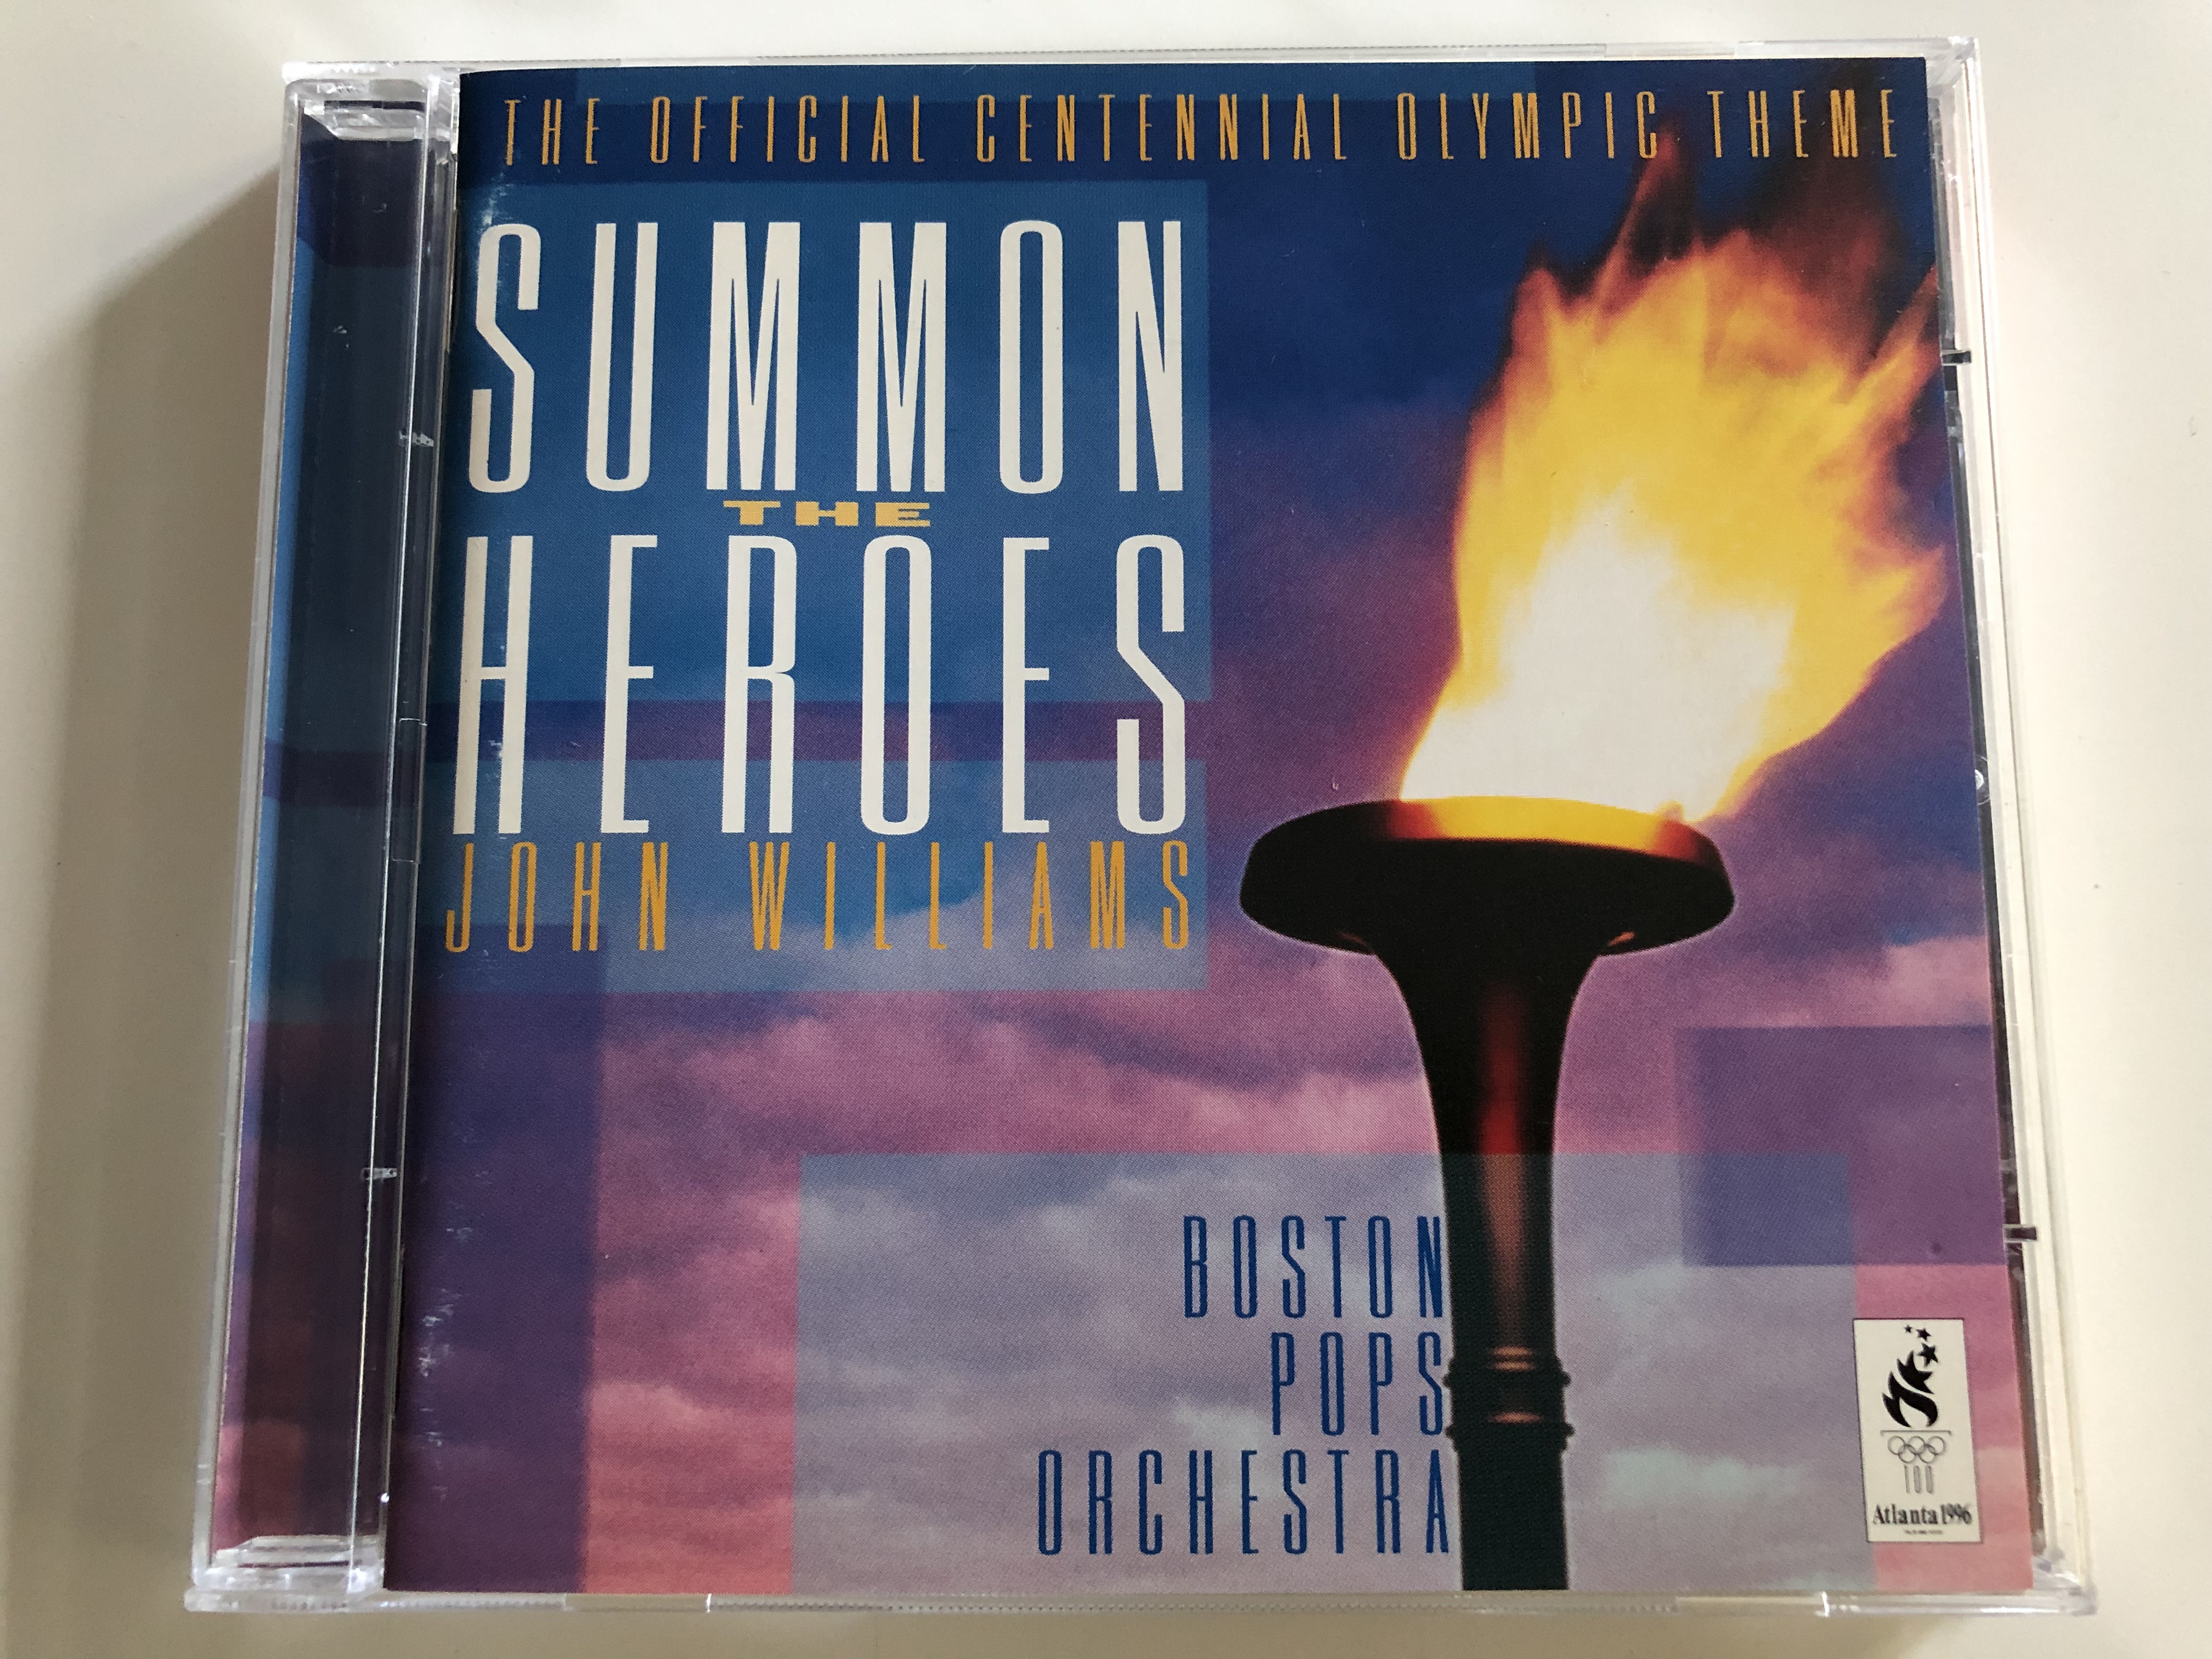 john-williams-summon-the-heroes-the-official-centennial-olympic-theme-boston-pops-orchestra-atlanta-1996-audio-cd-1996-sk-62622-1-.jpg